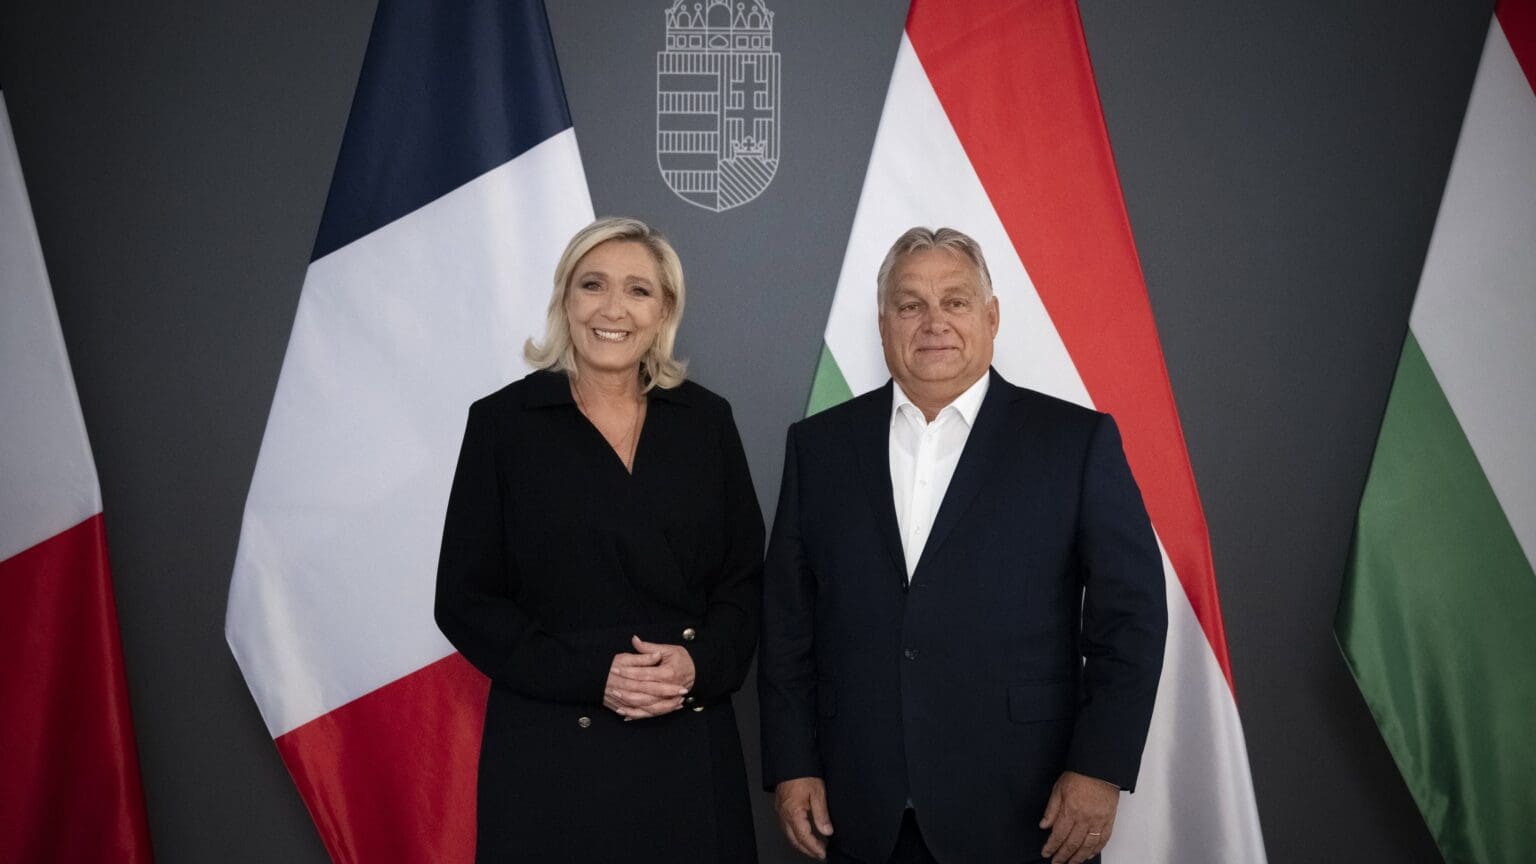 Viktor Orbán Welcomes Marine Le Pen in Budapest